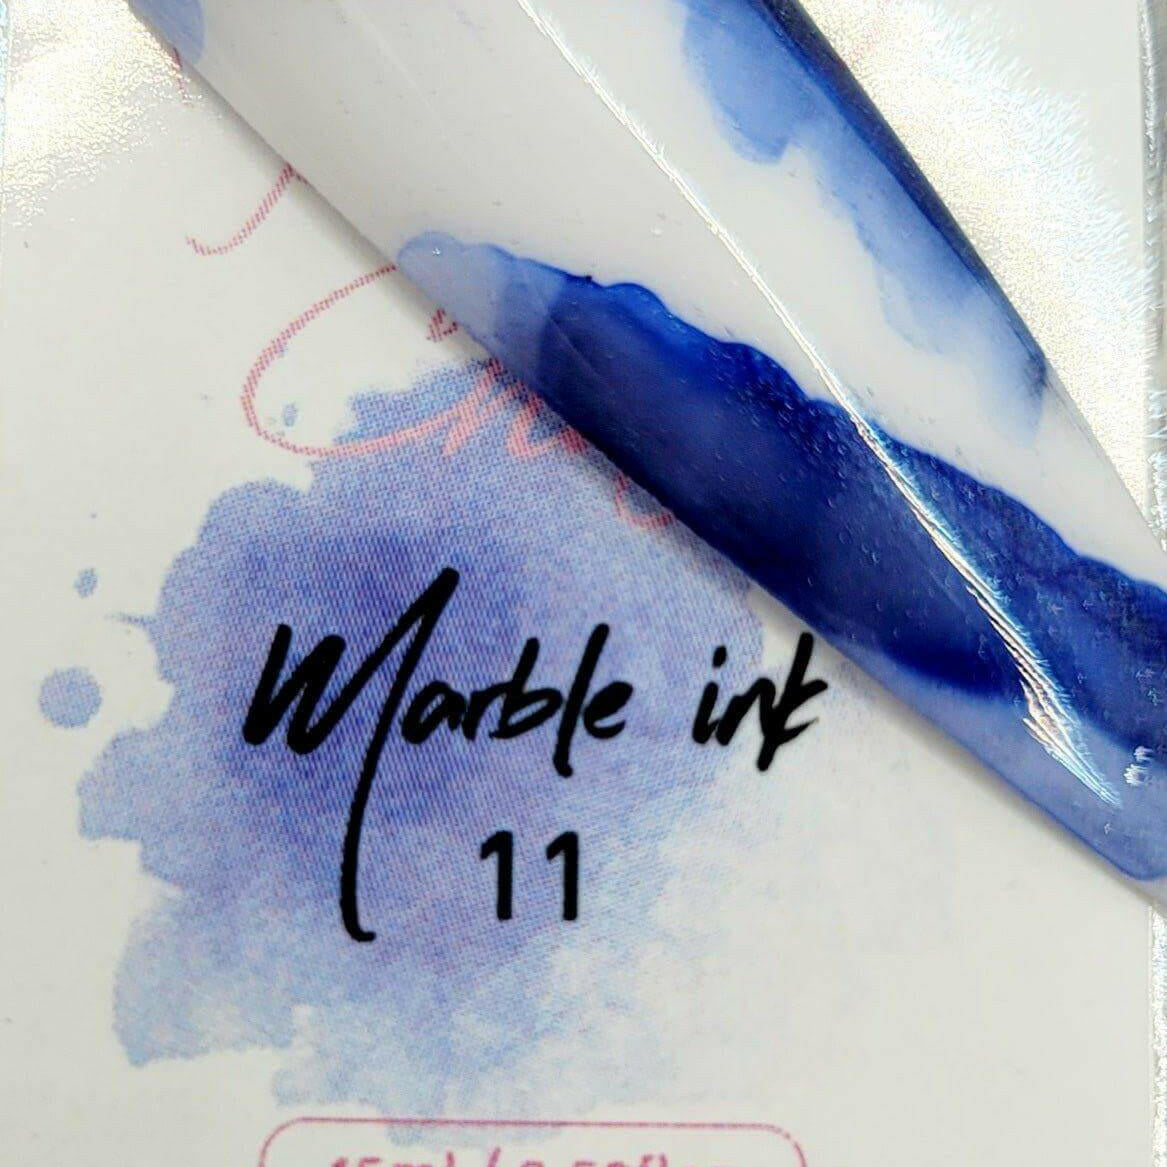 Metallic Marble Ink #11 by thePINKchair - thePINKchair.ca - Nail Art - thePINKchair nail studio